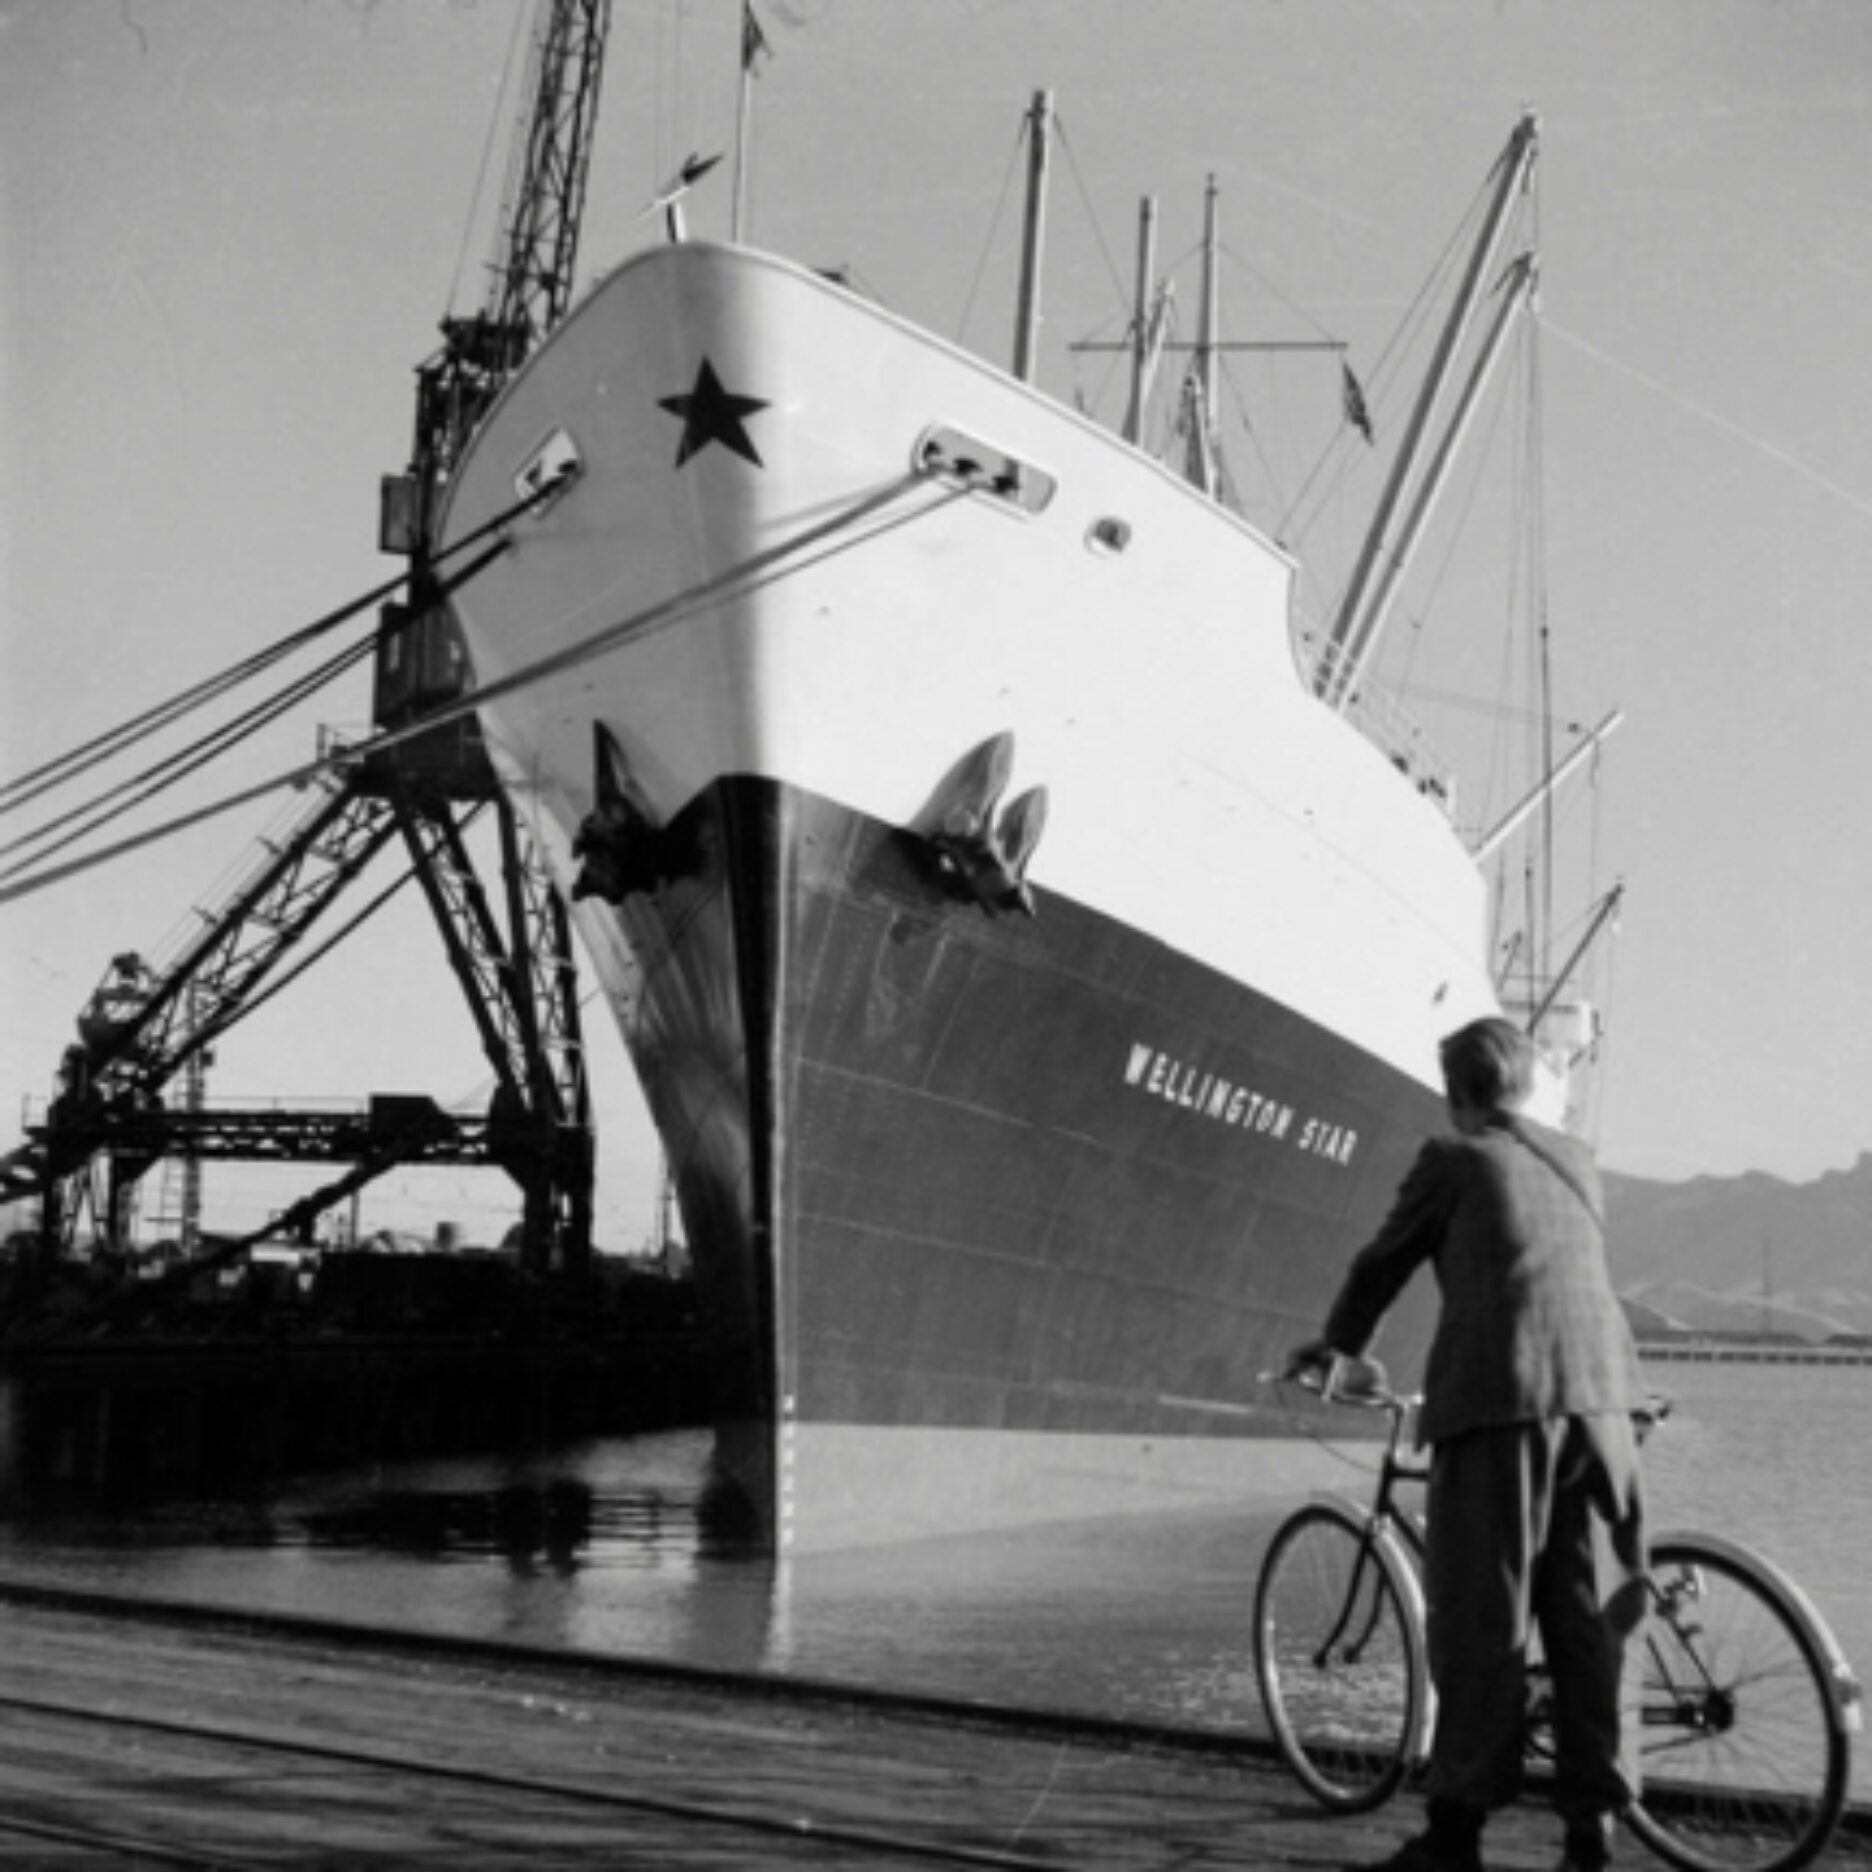 The ‘Wellington Star’ in Lyttelton Port, 1953 - 13214.1